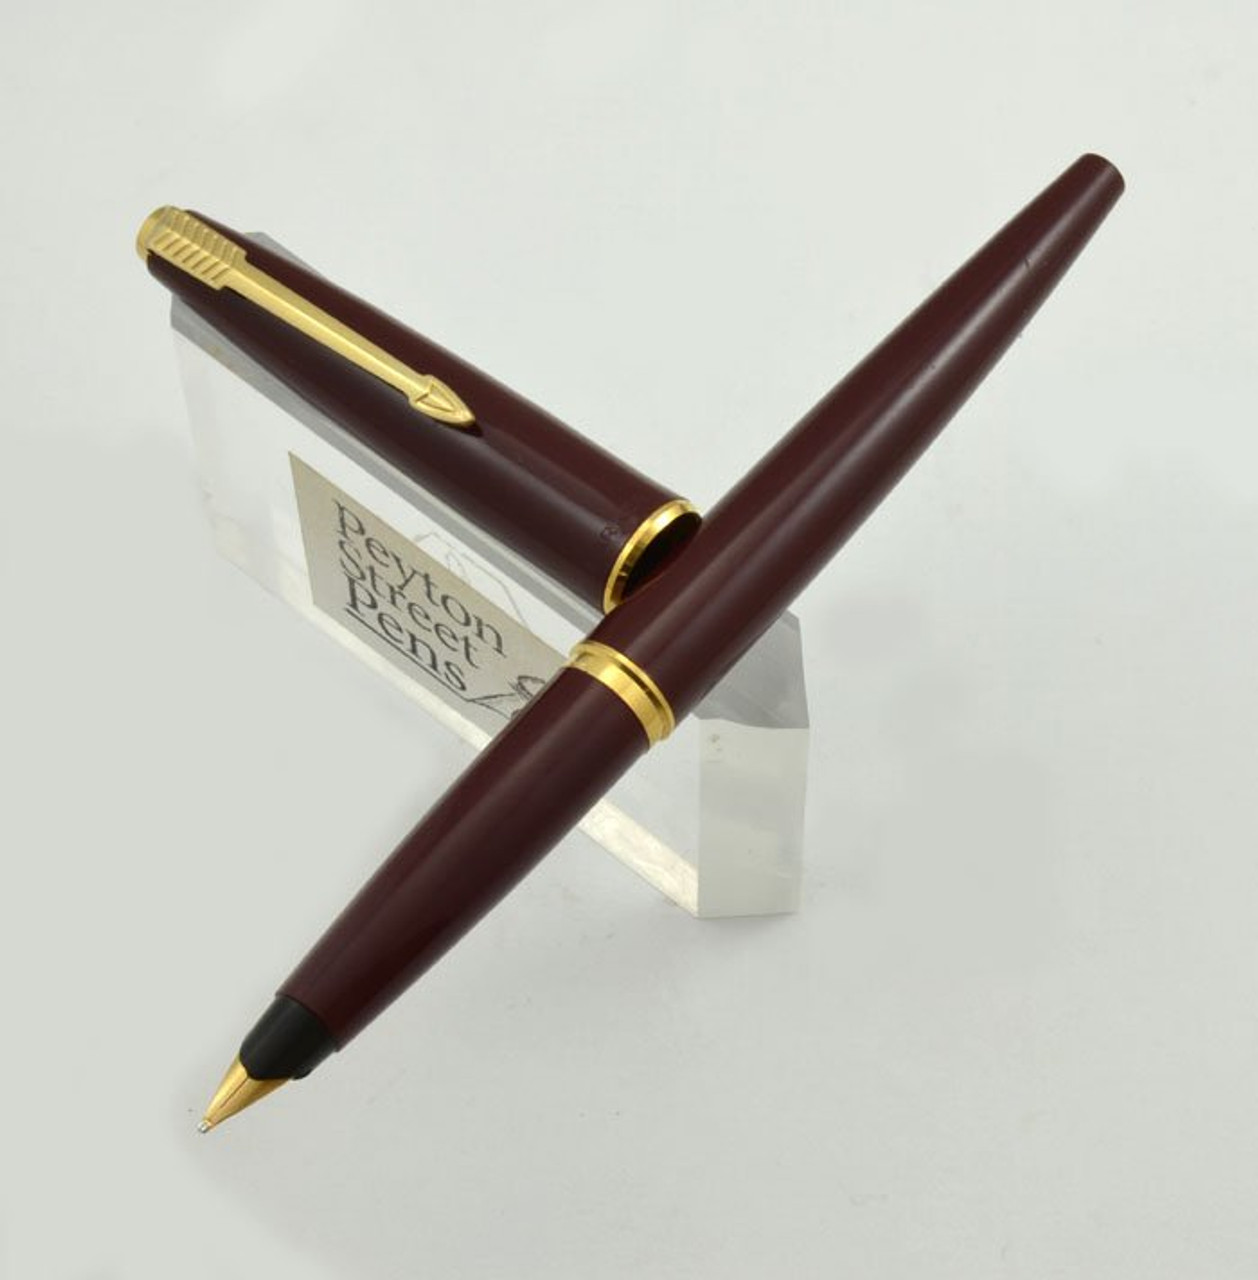 Parker 45 Fountain Pen - Burgundy, Gold Trim, Medium 14k Nib (Very Nice, Pre-Owned)